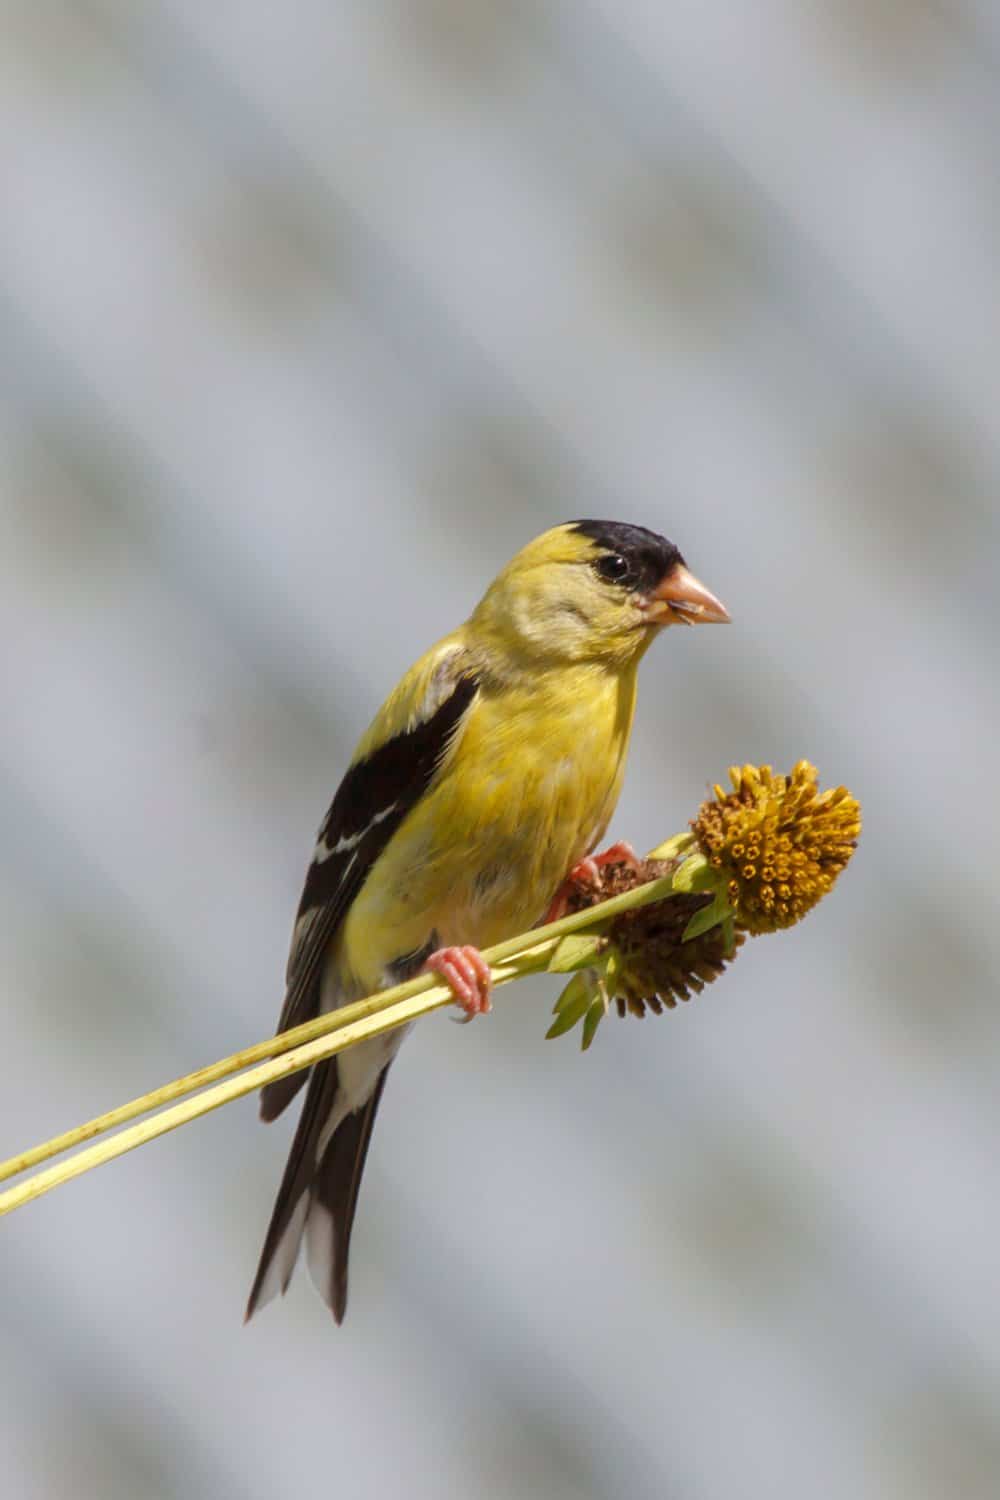 gold finch on flower stem